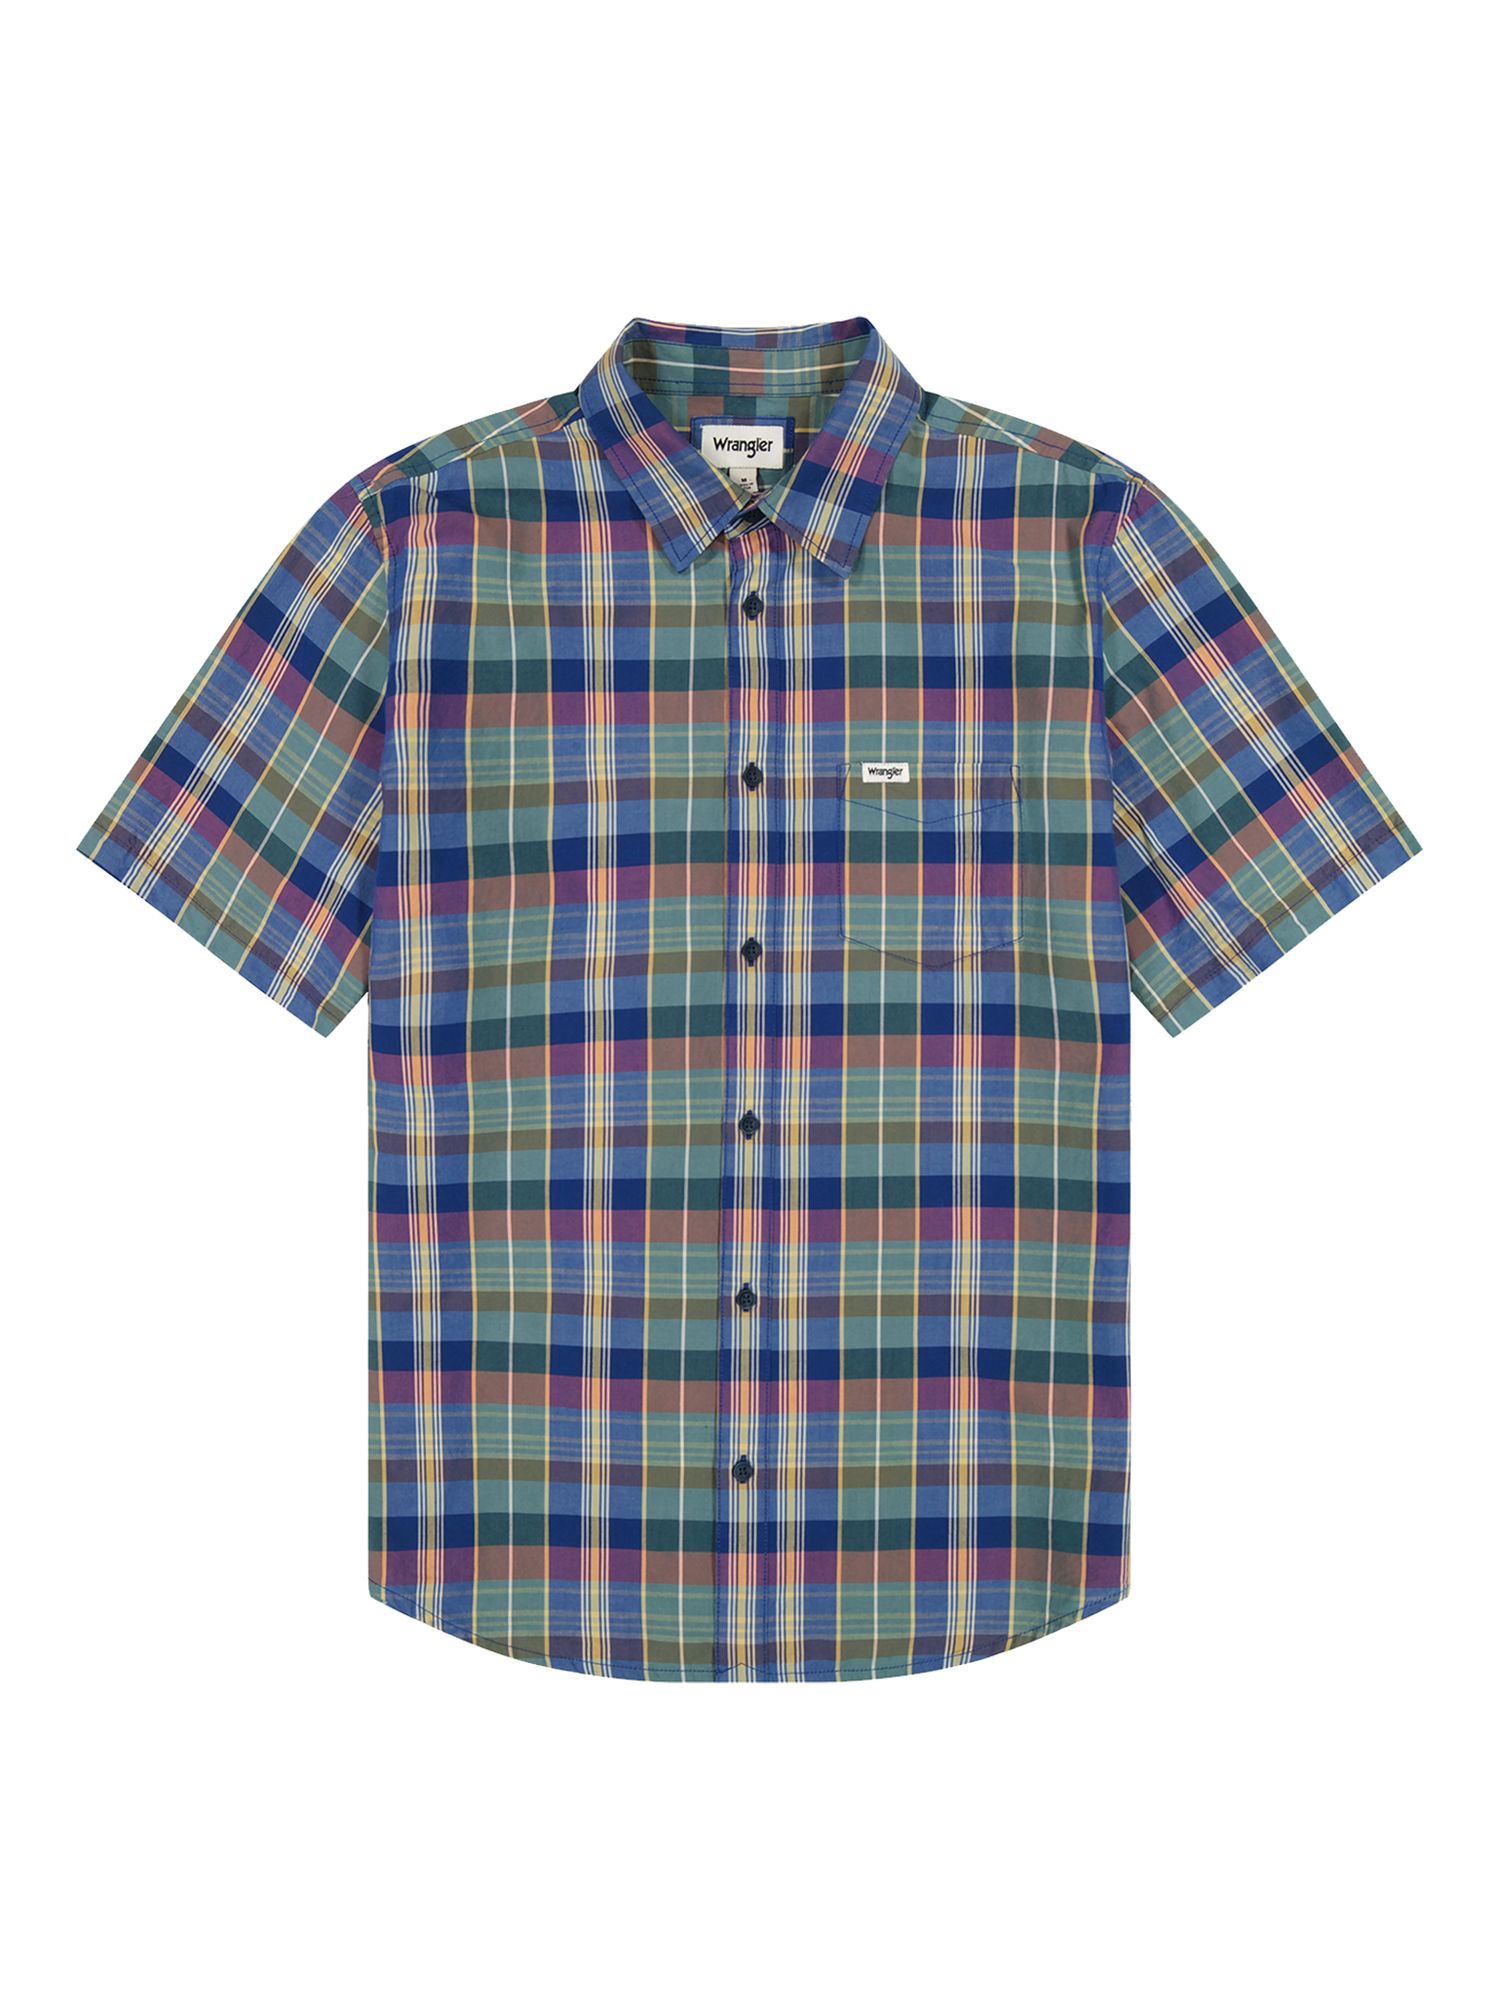 Wrangler Short Sleeve One Pocket Shirt, Blue Madaras, XL